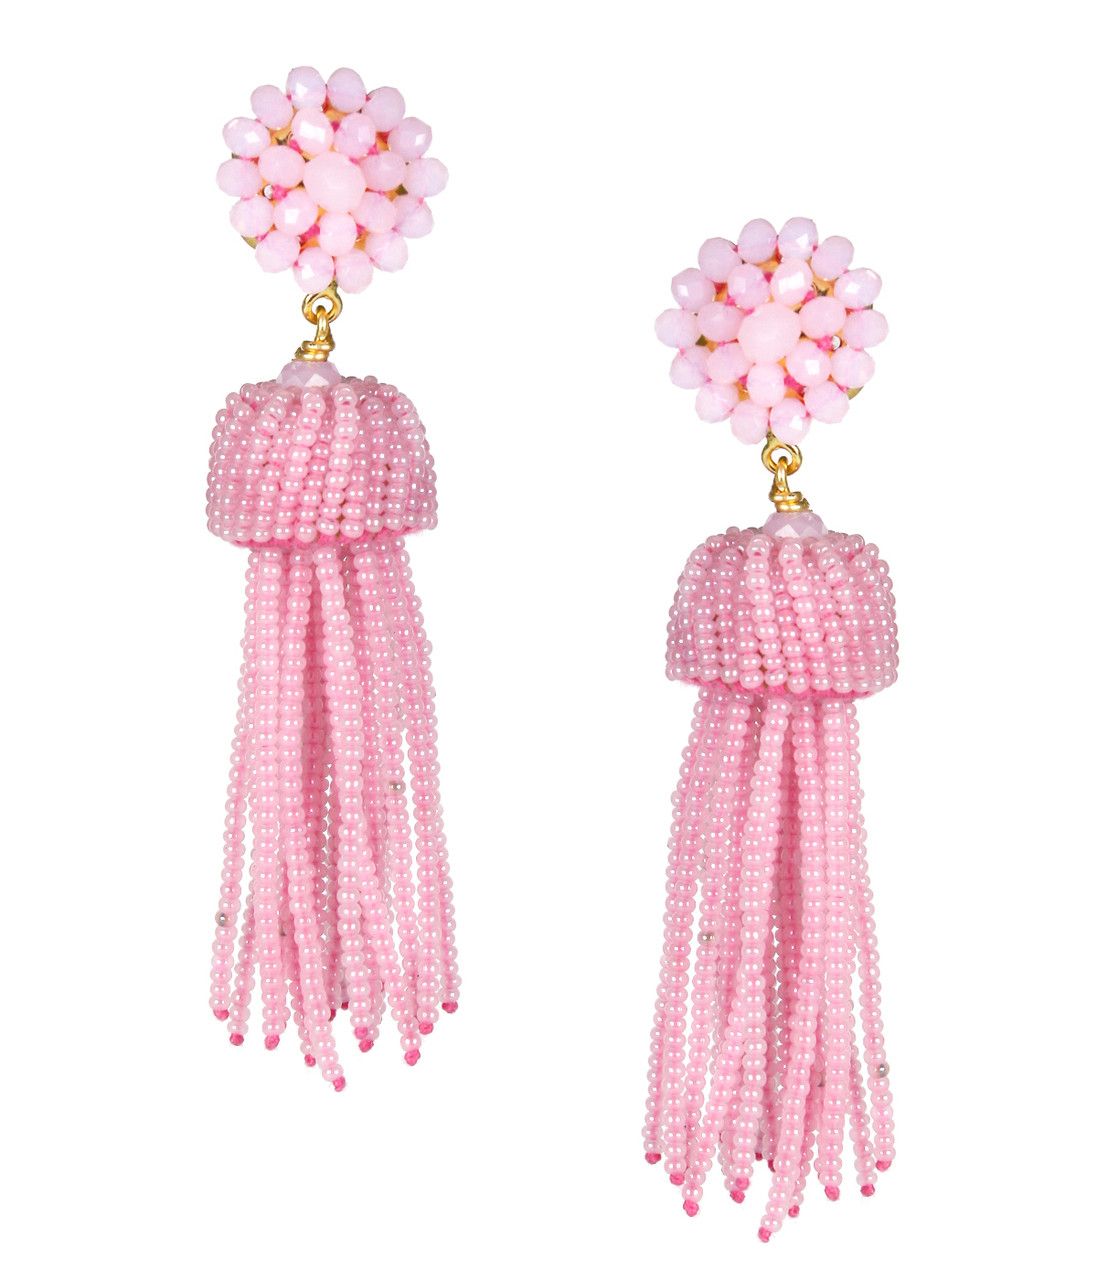 Tassel Earrings - Cotton Candy | Lisi Lerch Inc